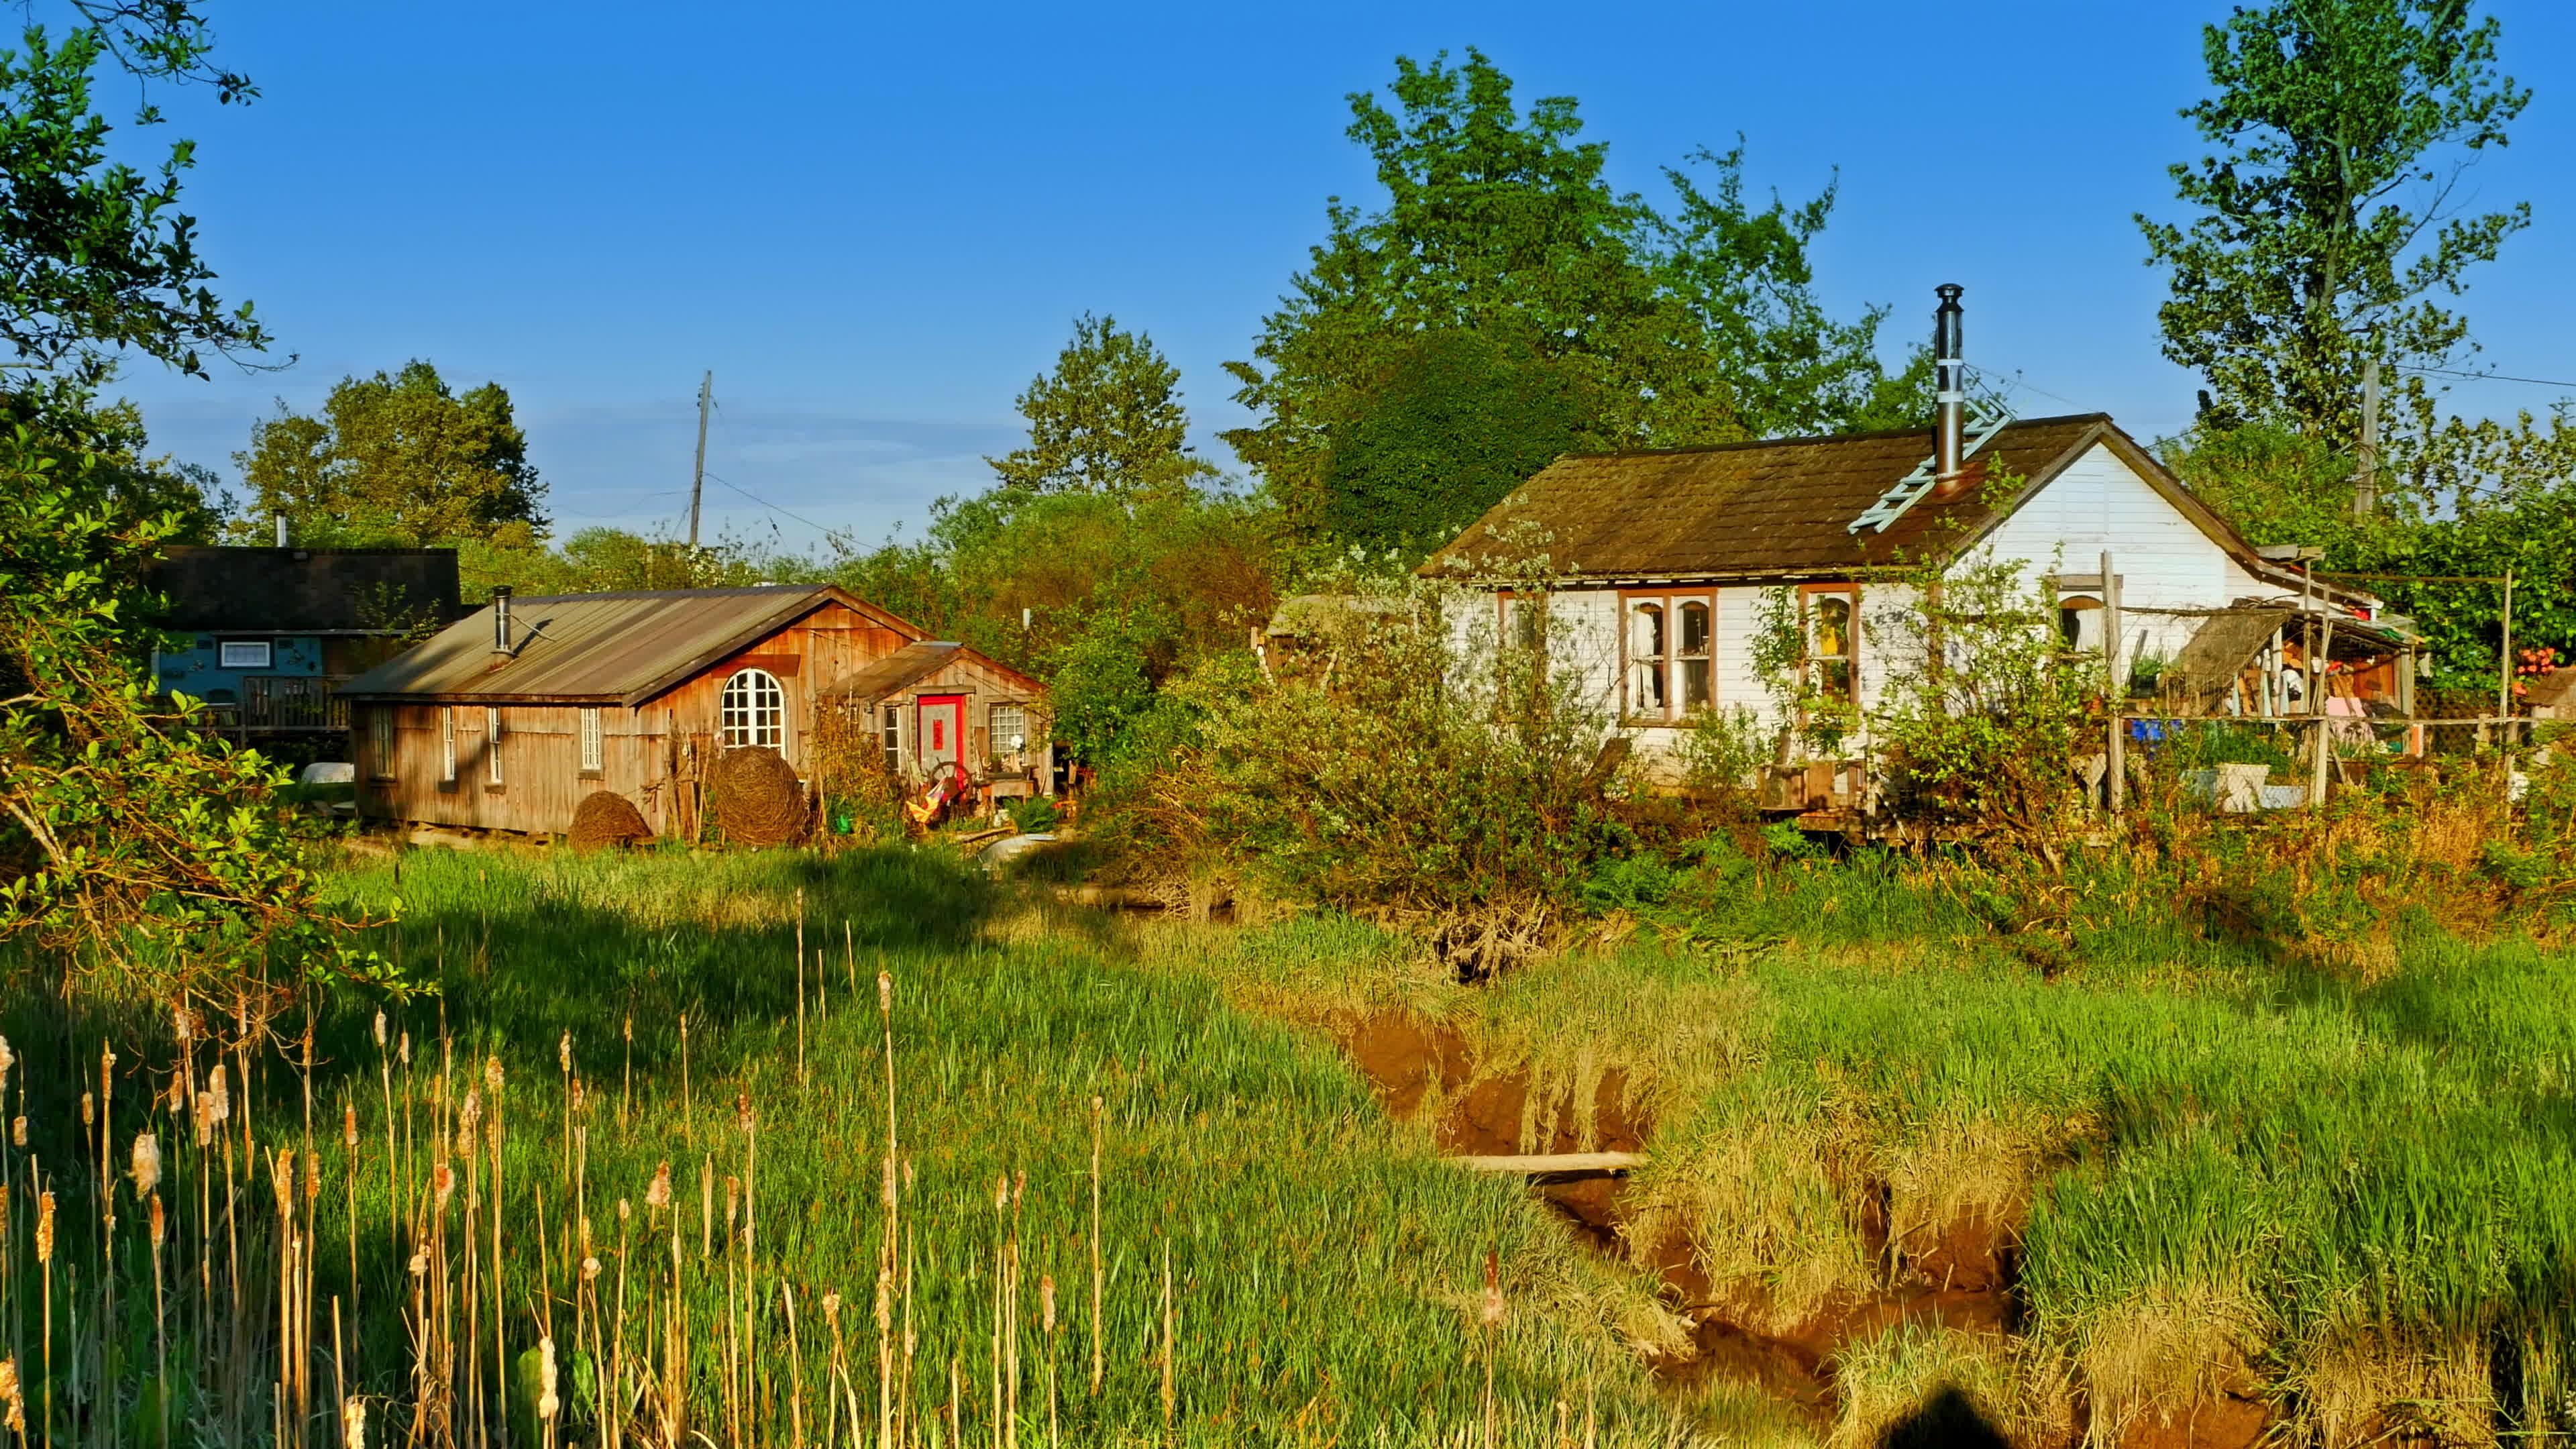 Grassland marsh village, Fishing community simplicity, Tranquil homes, Natural beauty, 3840x2160 4K Desktop